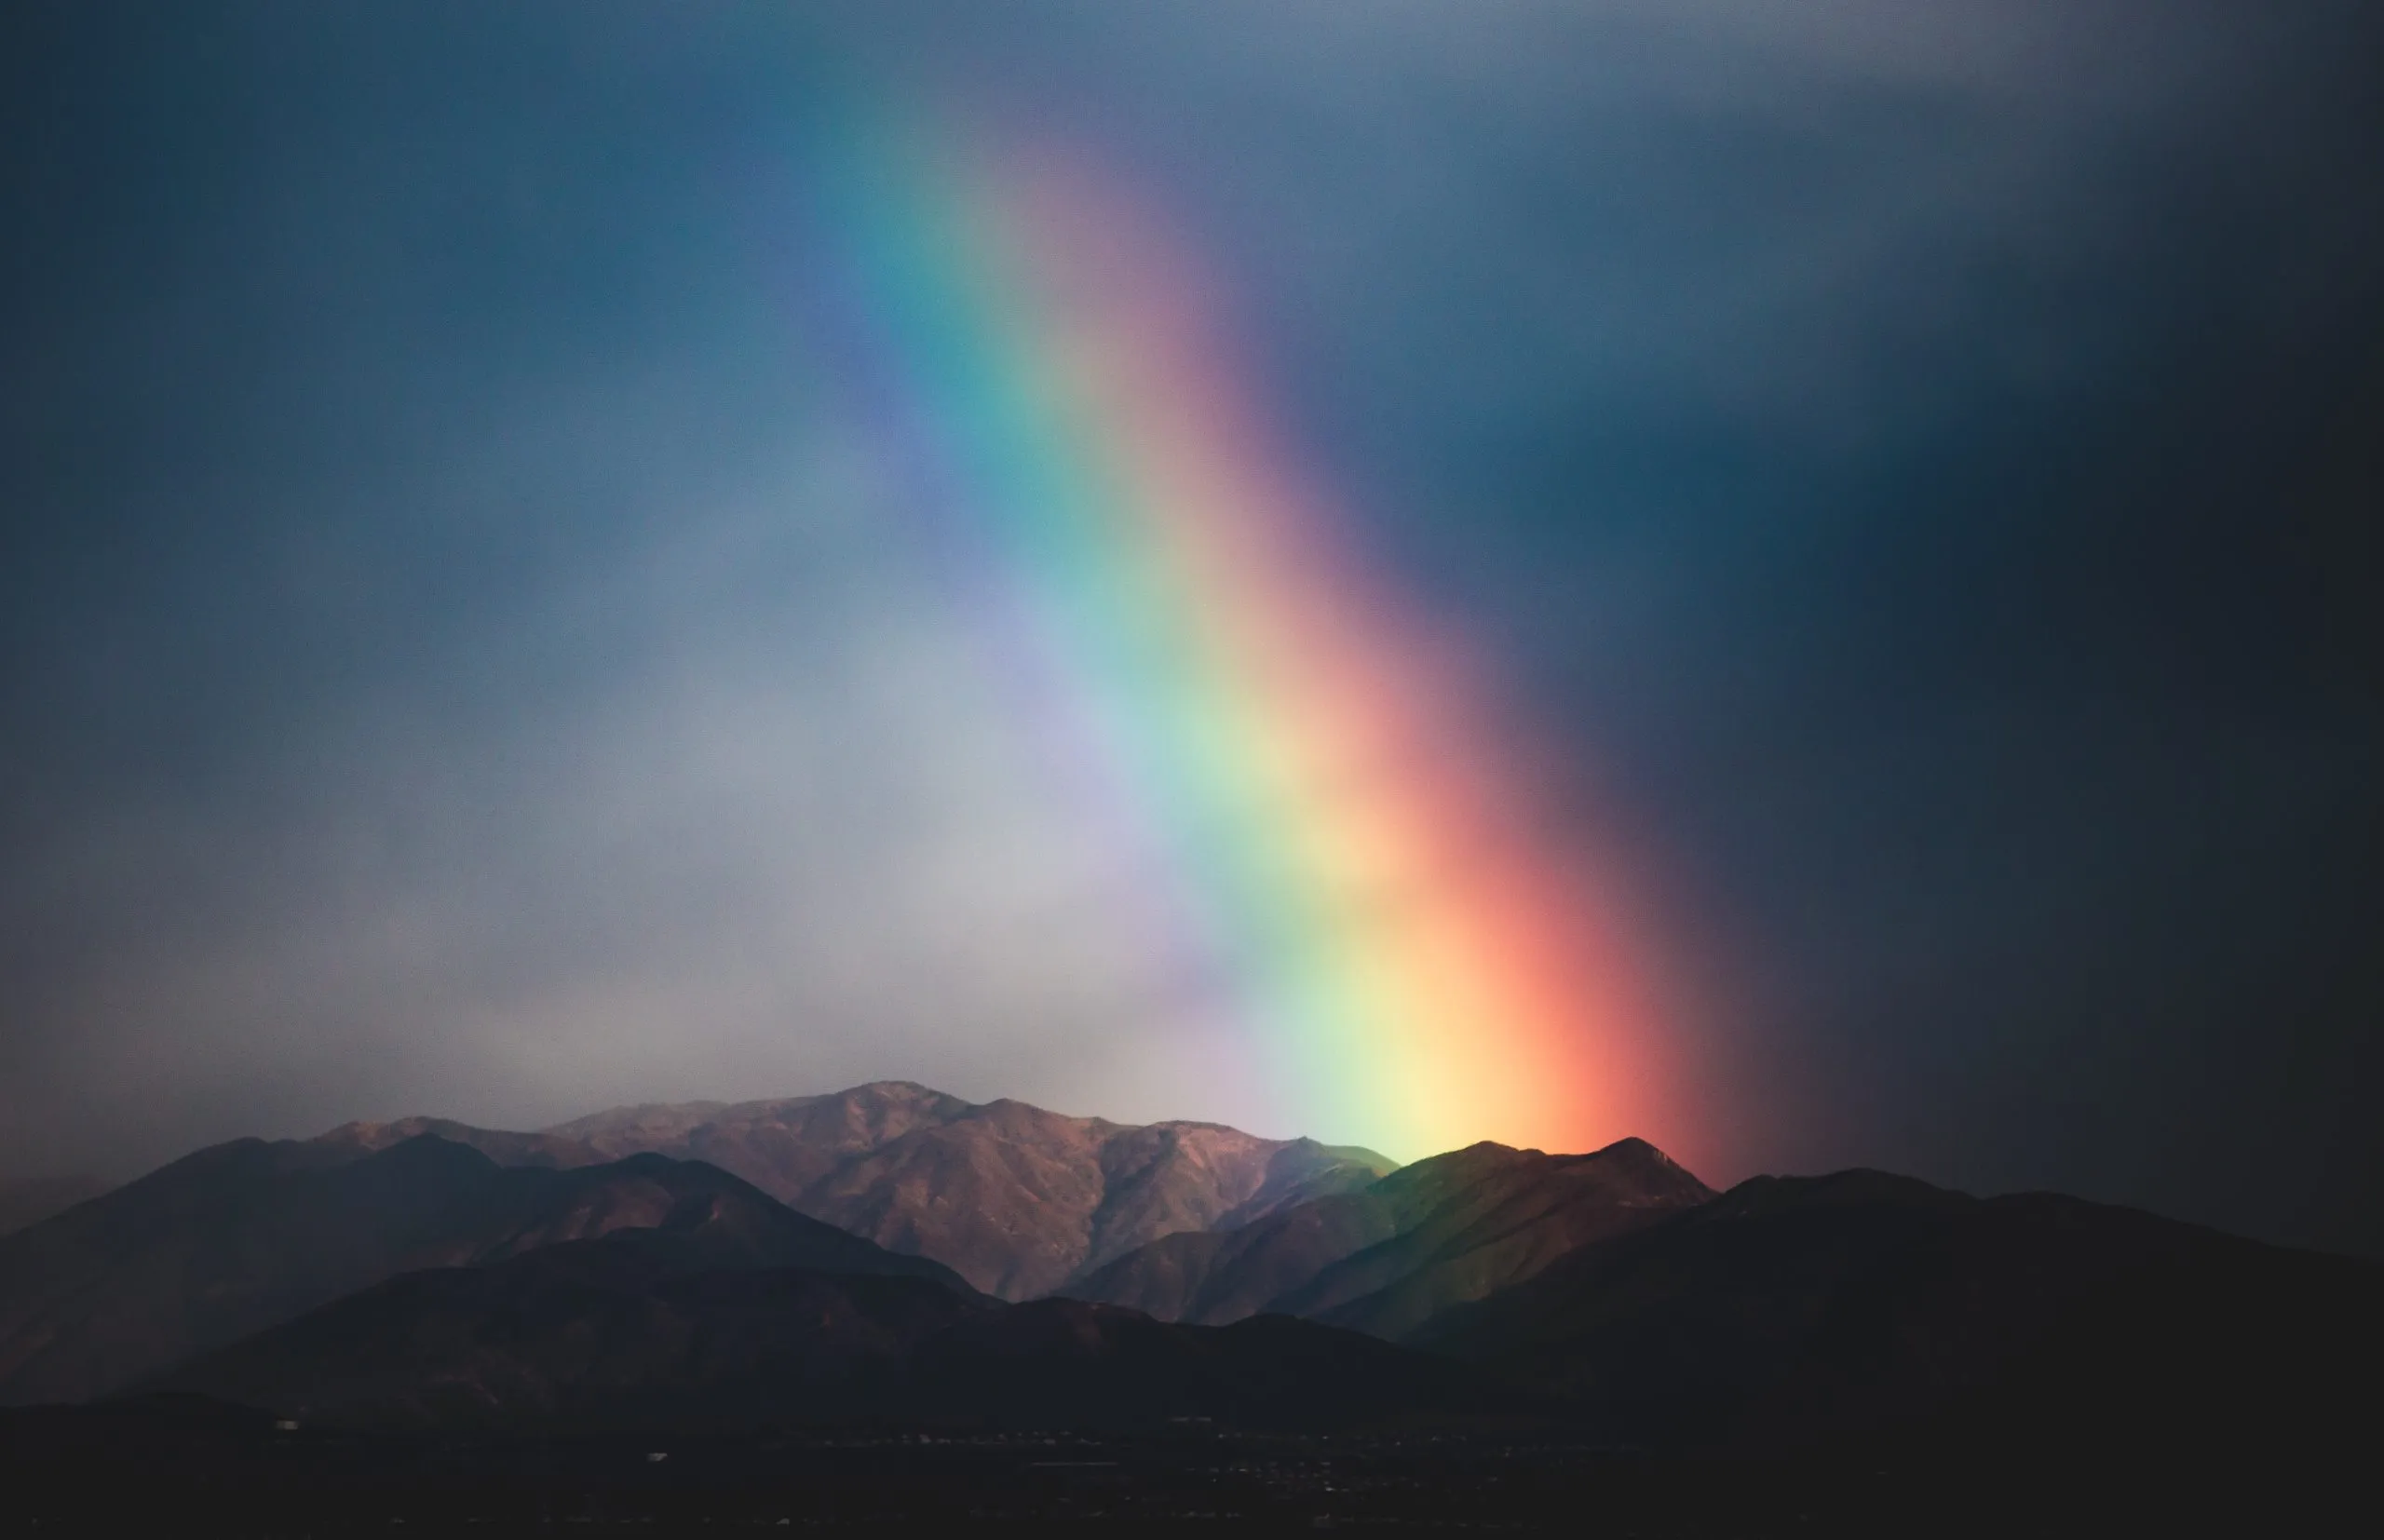 A dark image of mountains with a dark sky. Above the mountains in the middle of the image there is a rainbow.